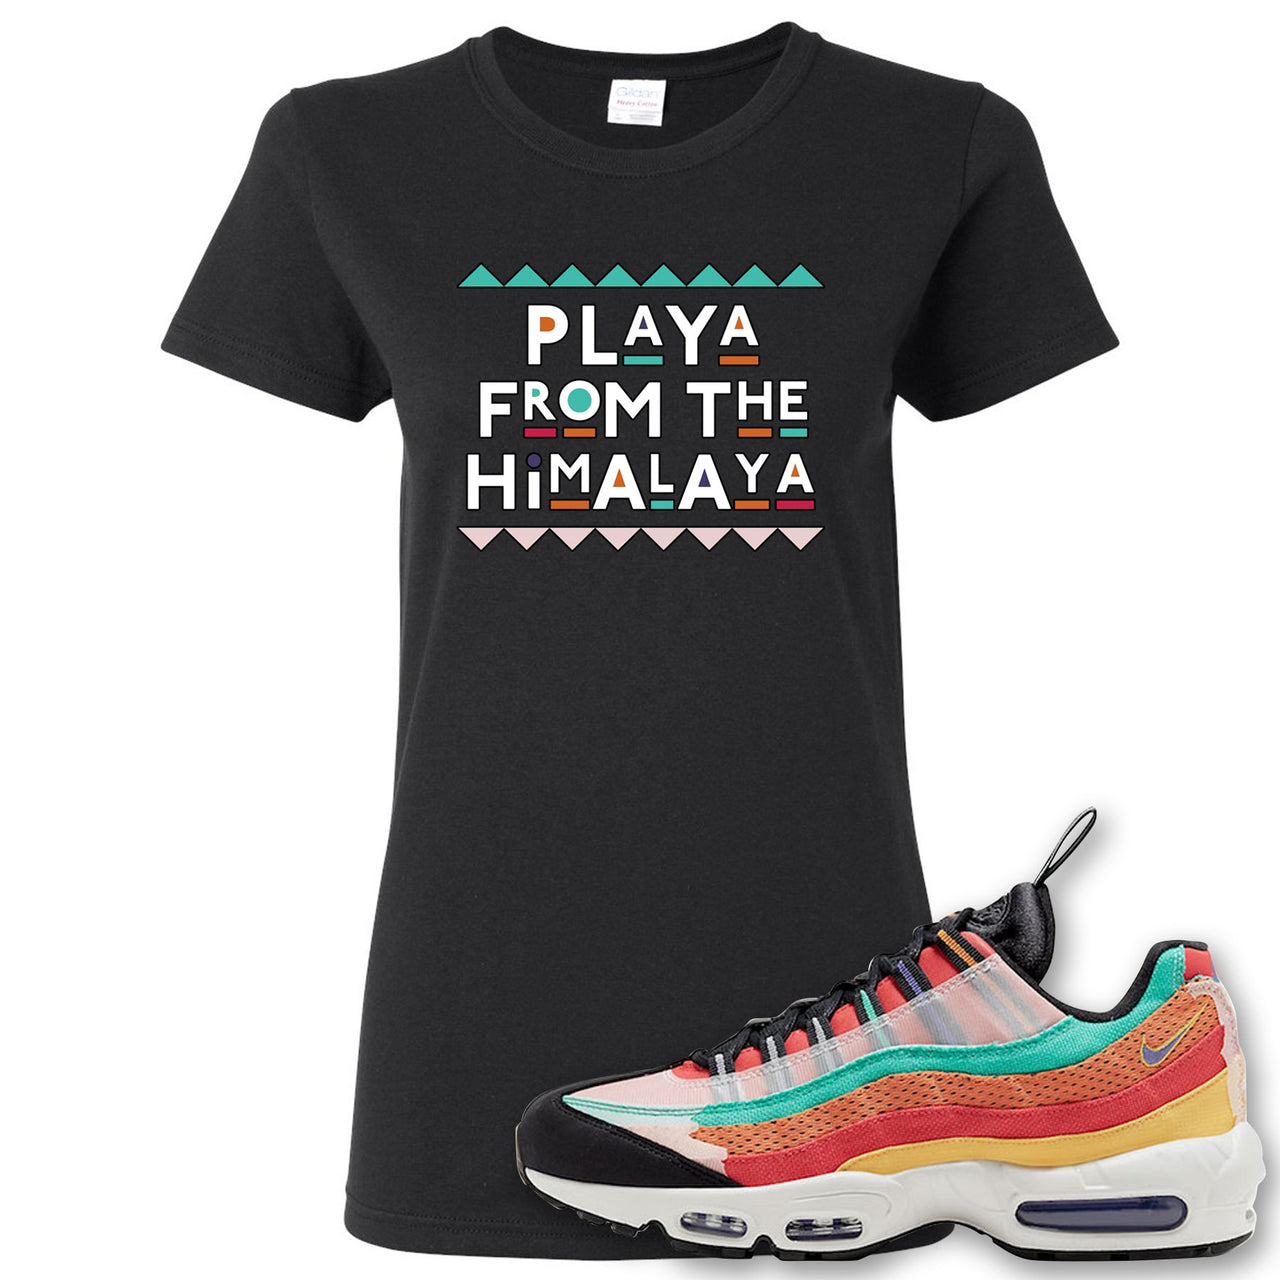 Air Max 95 Black History Month Sneaker Black Women's T Shirt | Women's Tees to match Nike Air Max 95 Black History Month Shoes | Playa From The Himalaya